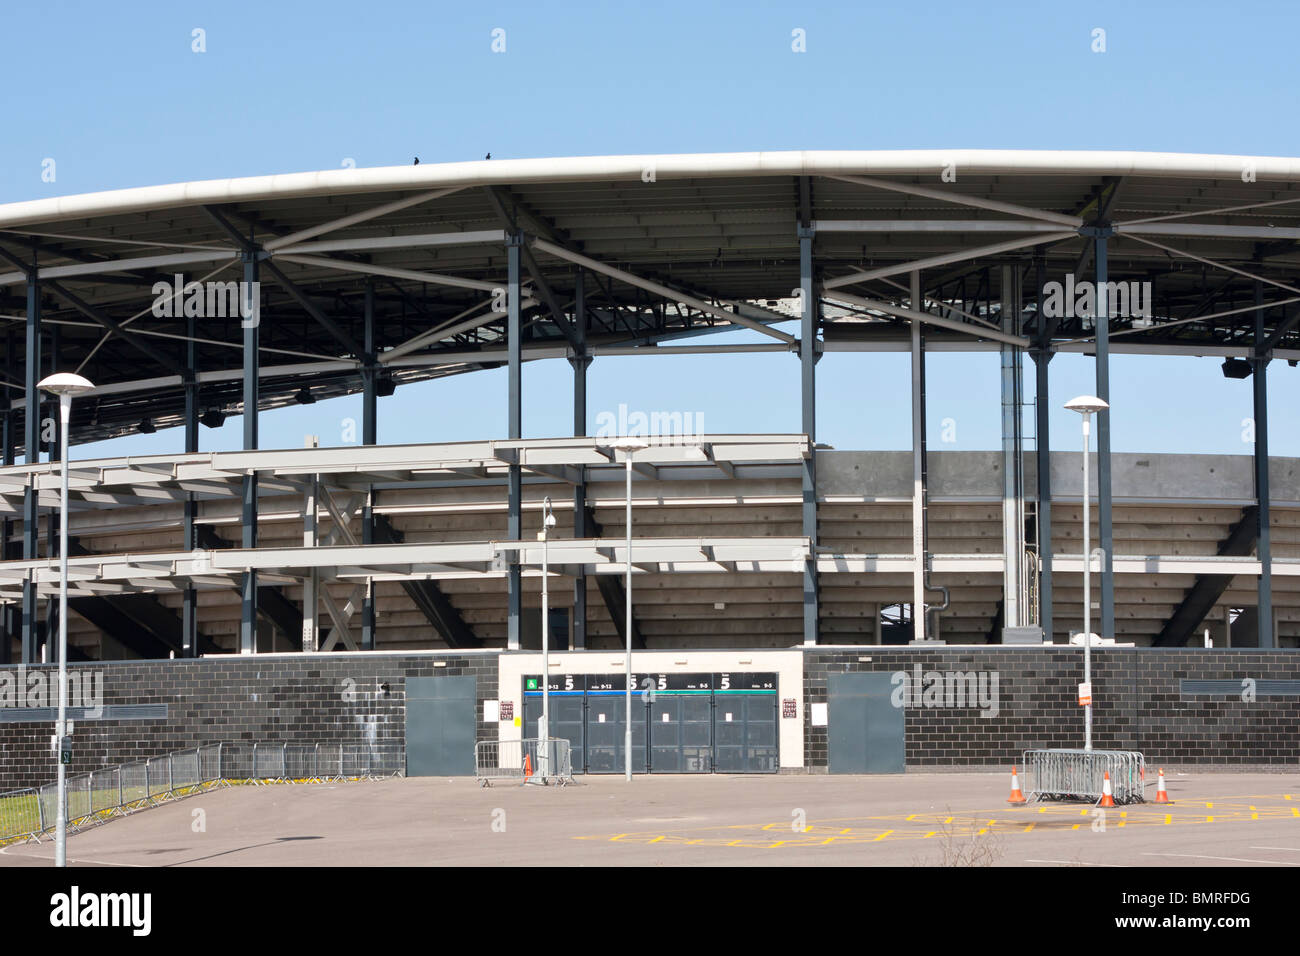 Stadium MK, home of the MK Dons football team Stock Photo